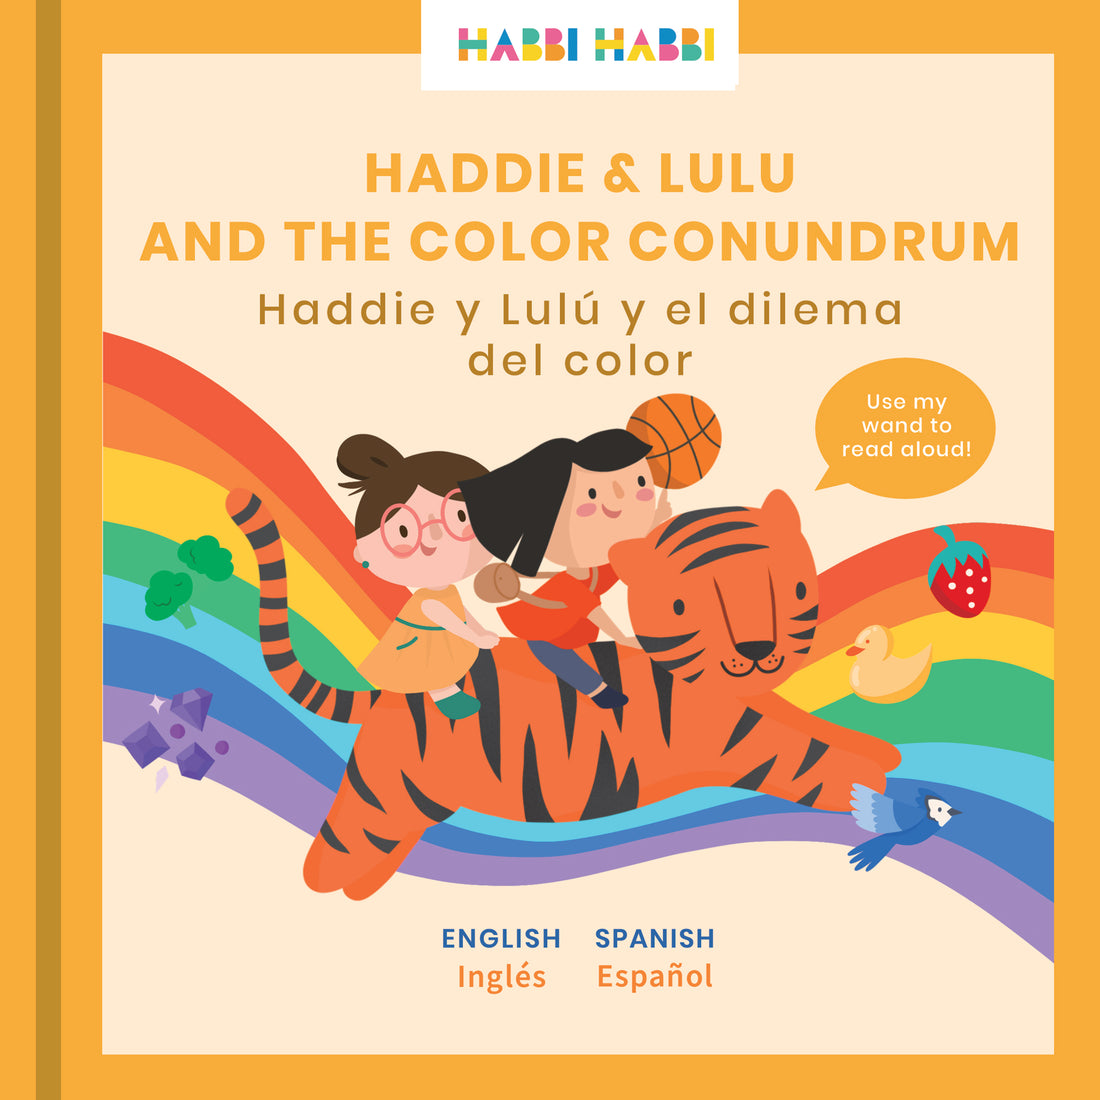 Children's books about colors